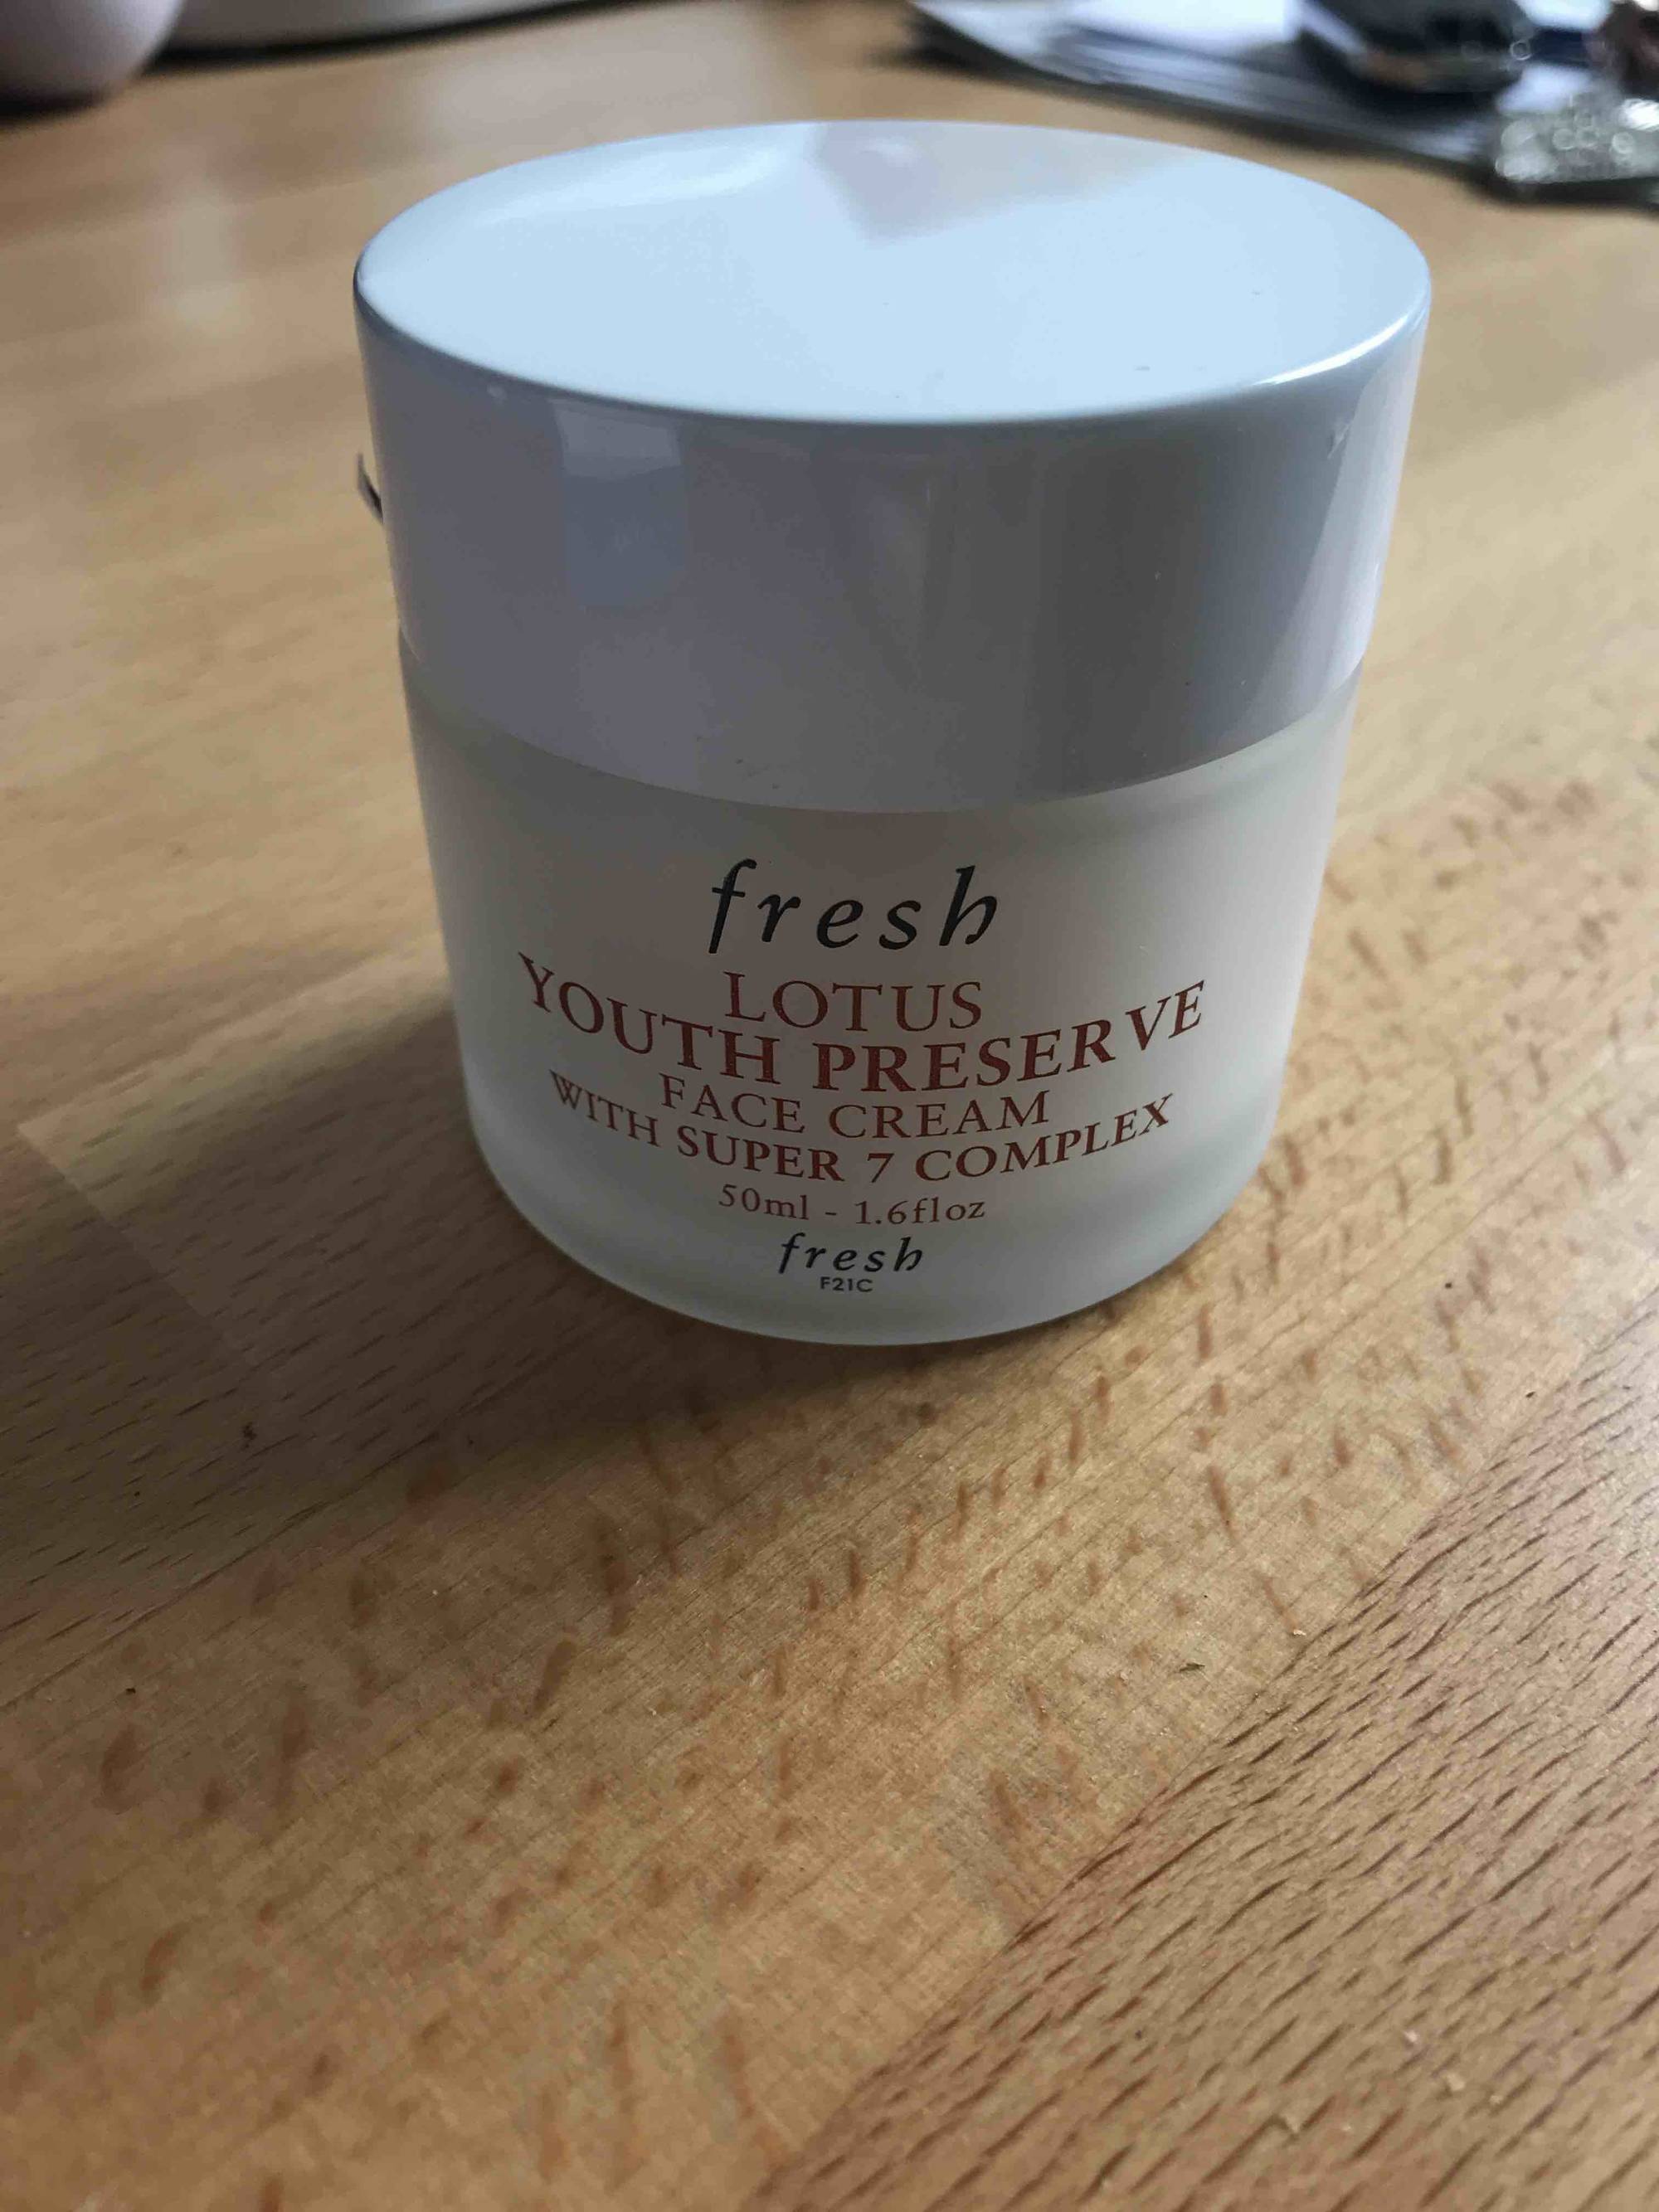 FRESH - Lotus youth preserve face cream